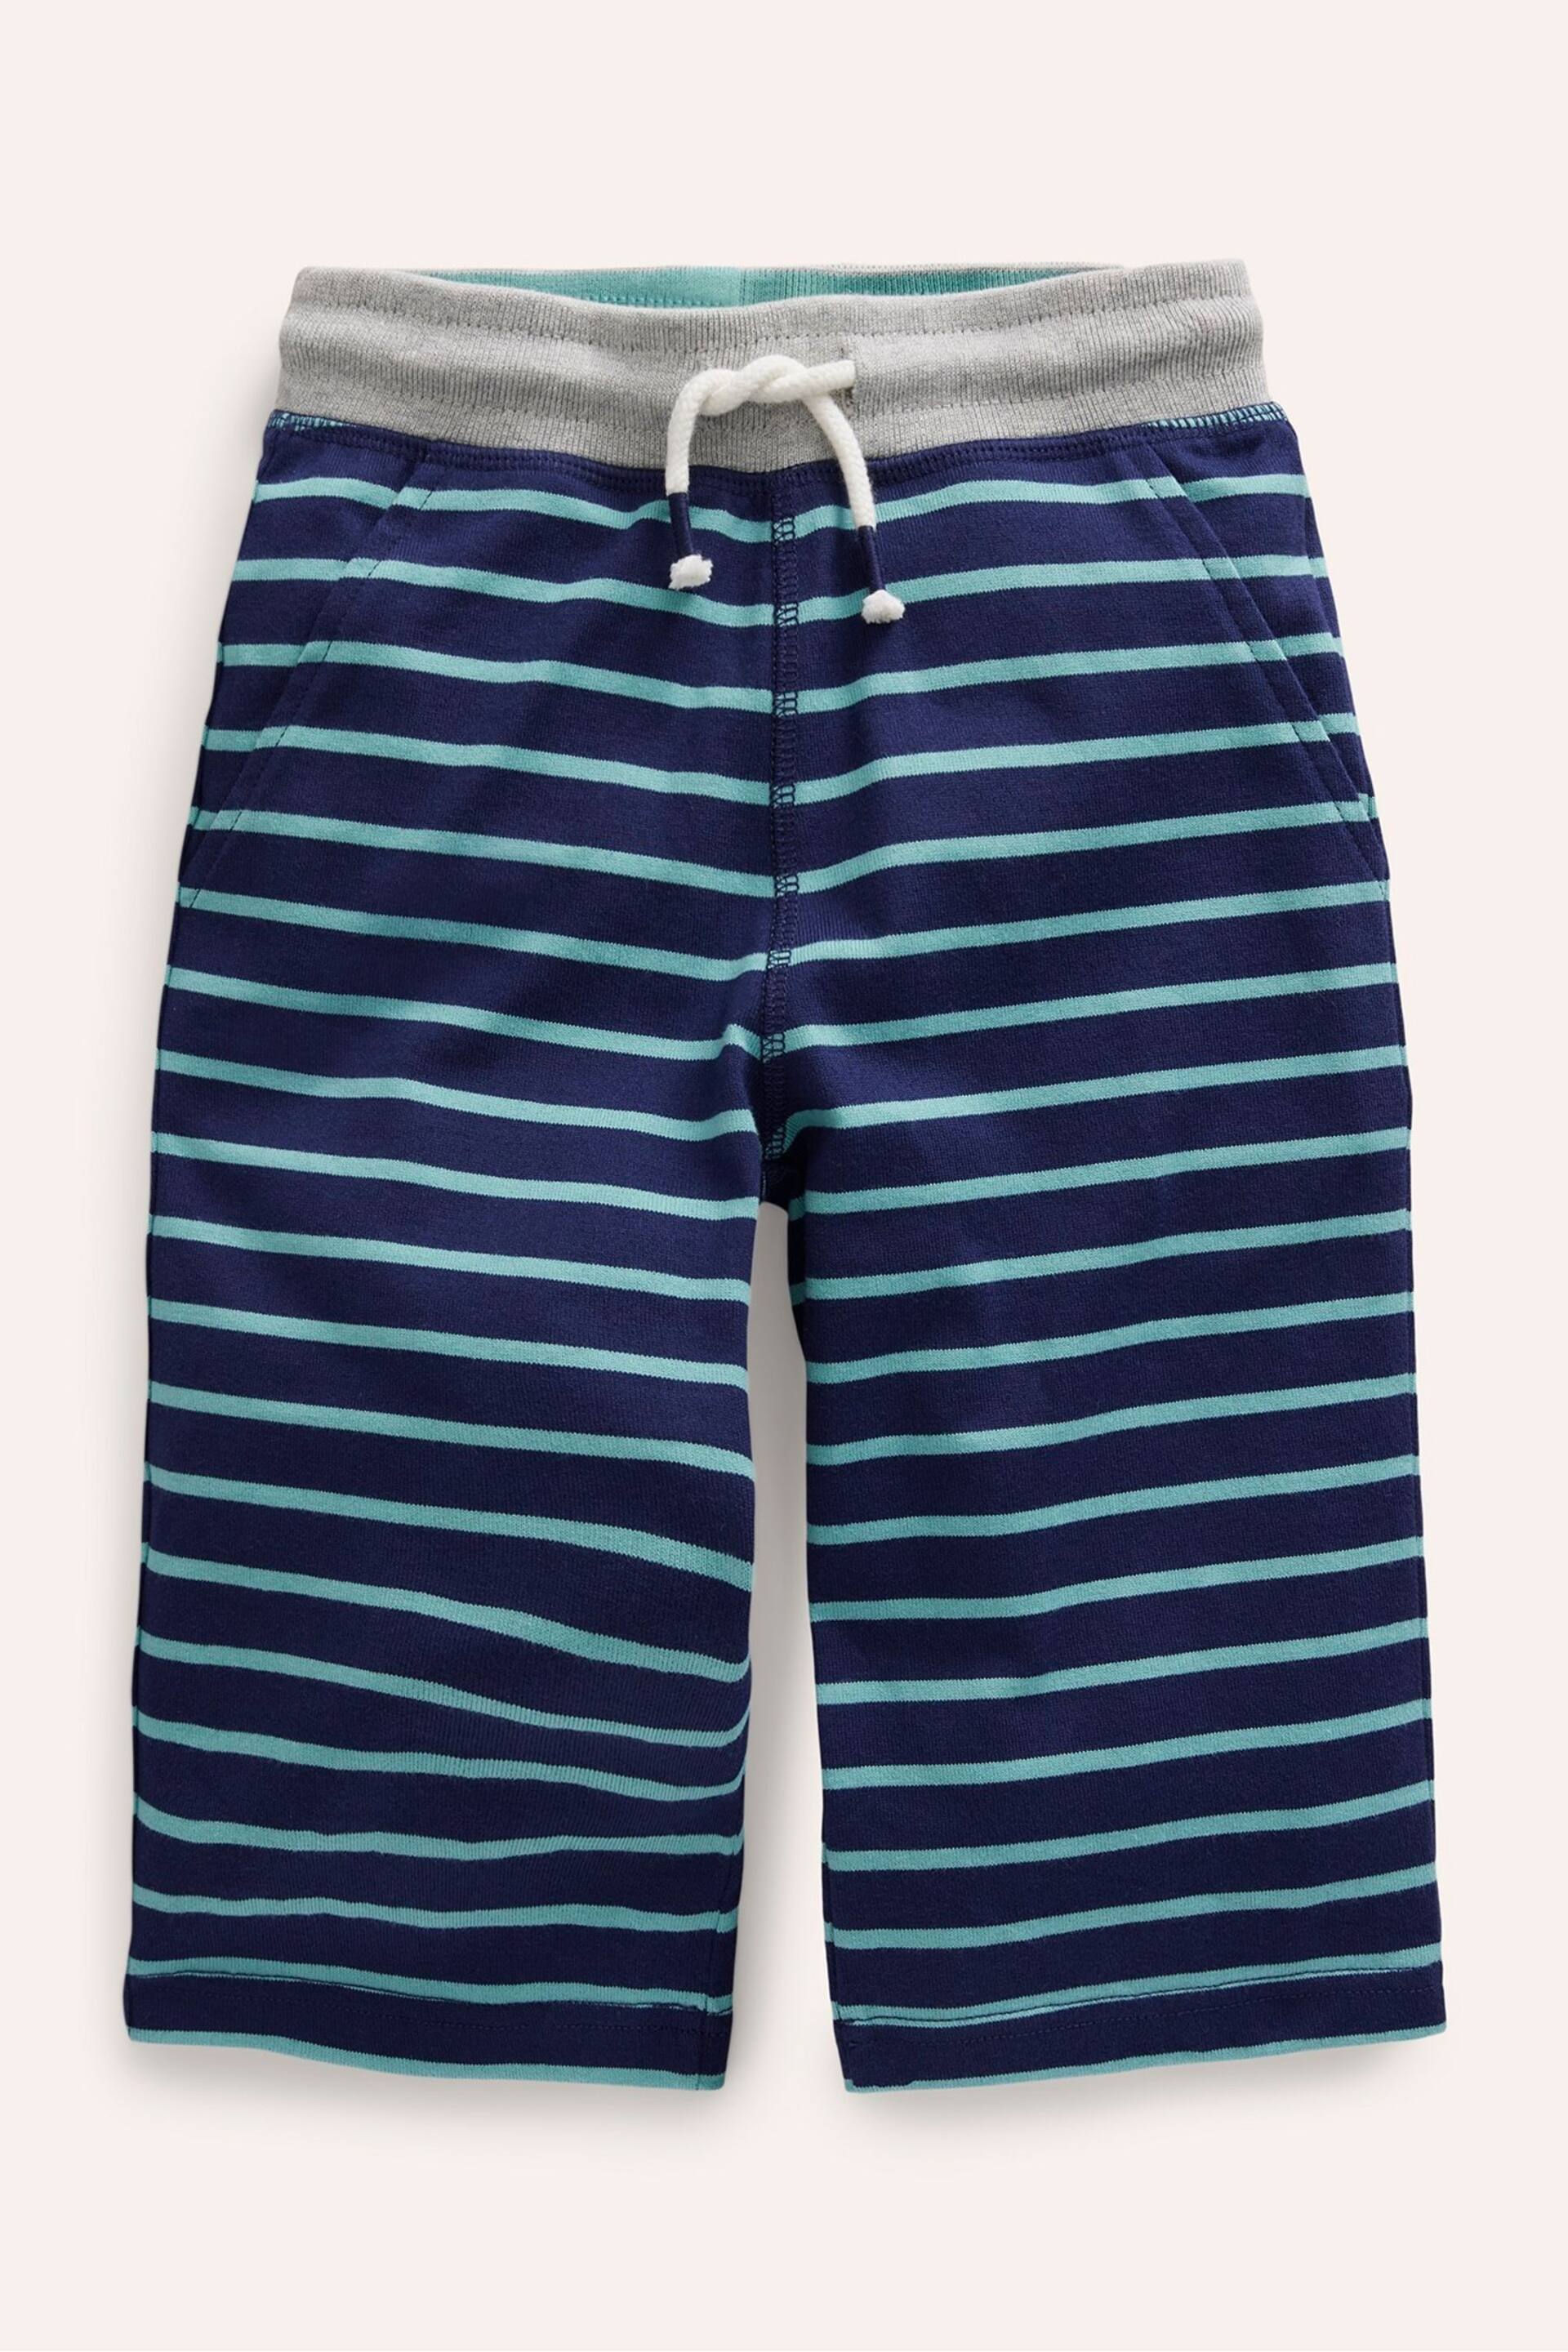 Boden Blue Dark Baggies Jersey Shorts - Image 1 of 3